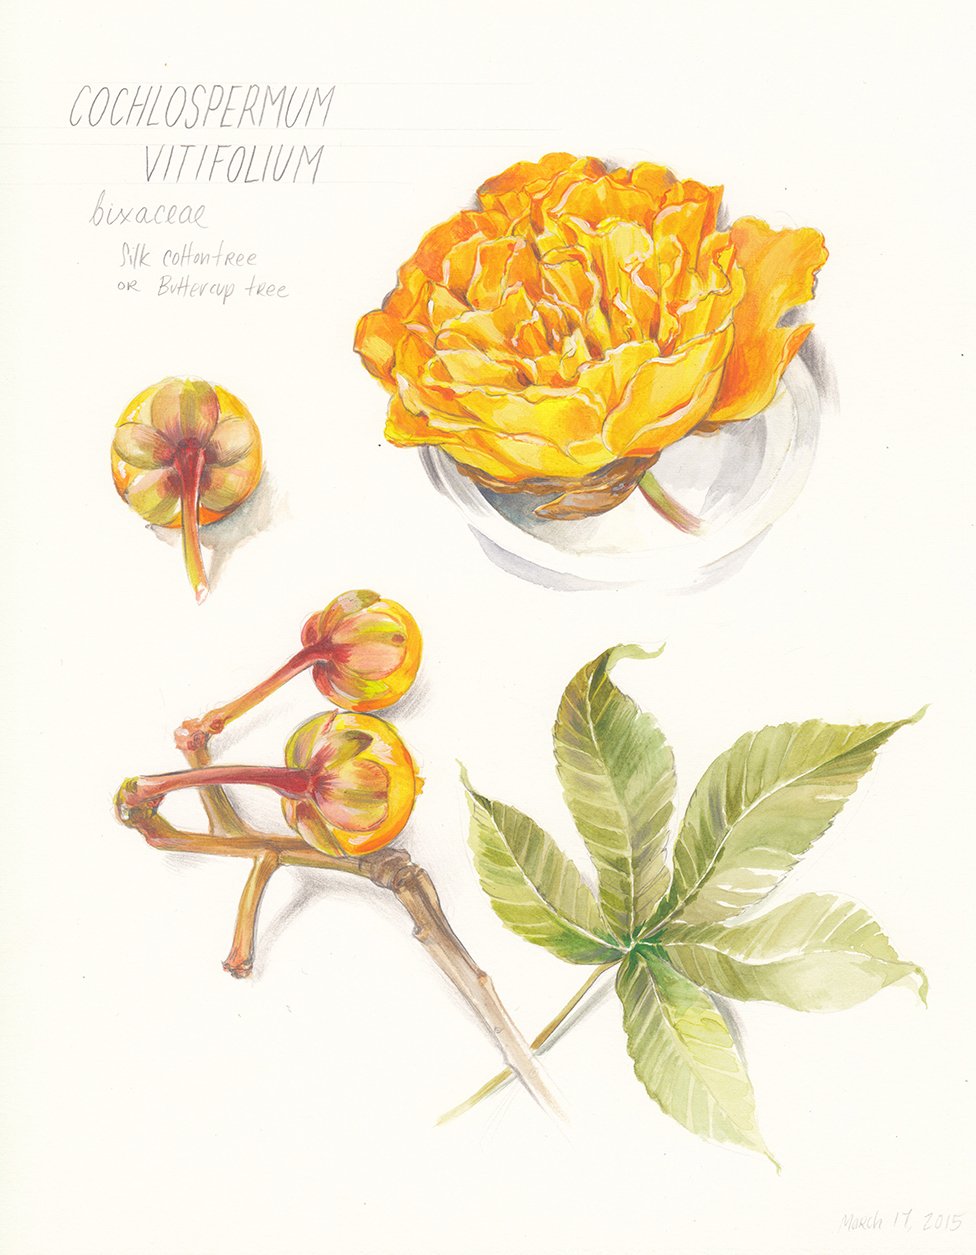 kauai-botanical-illustration-cocholospermum-vitifolum-web.jpg